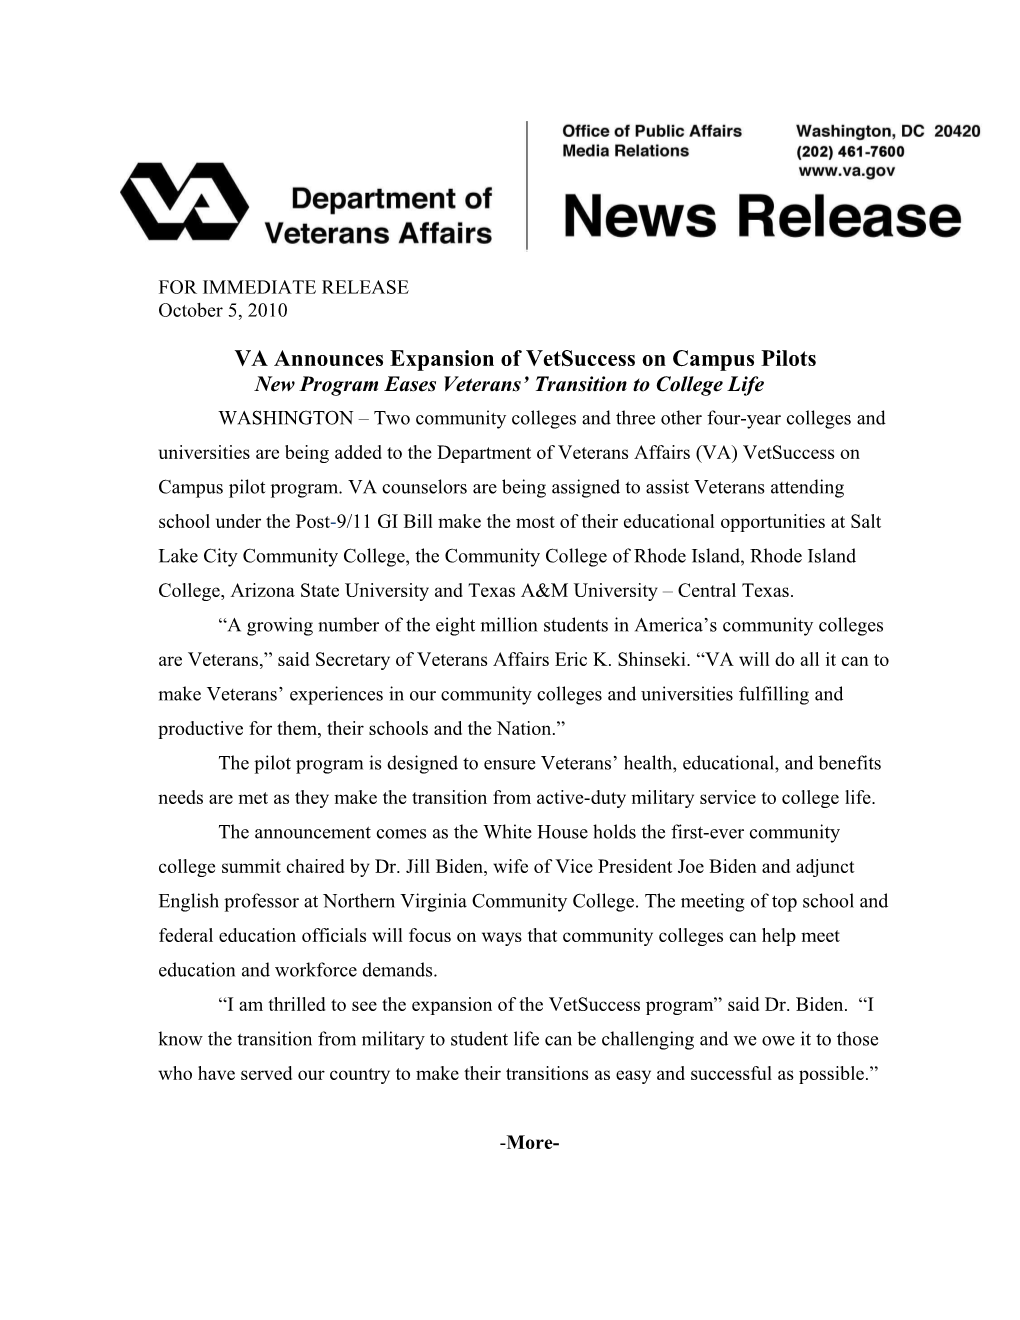 VA Announces Expansion of Vetsuccess on Campus Pilots